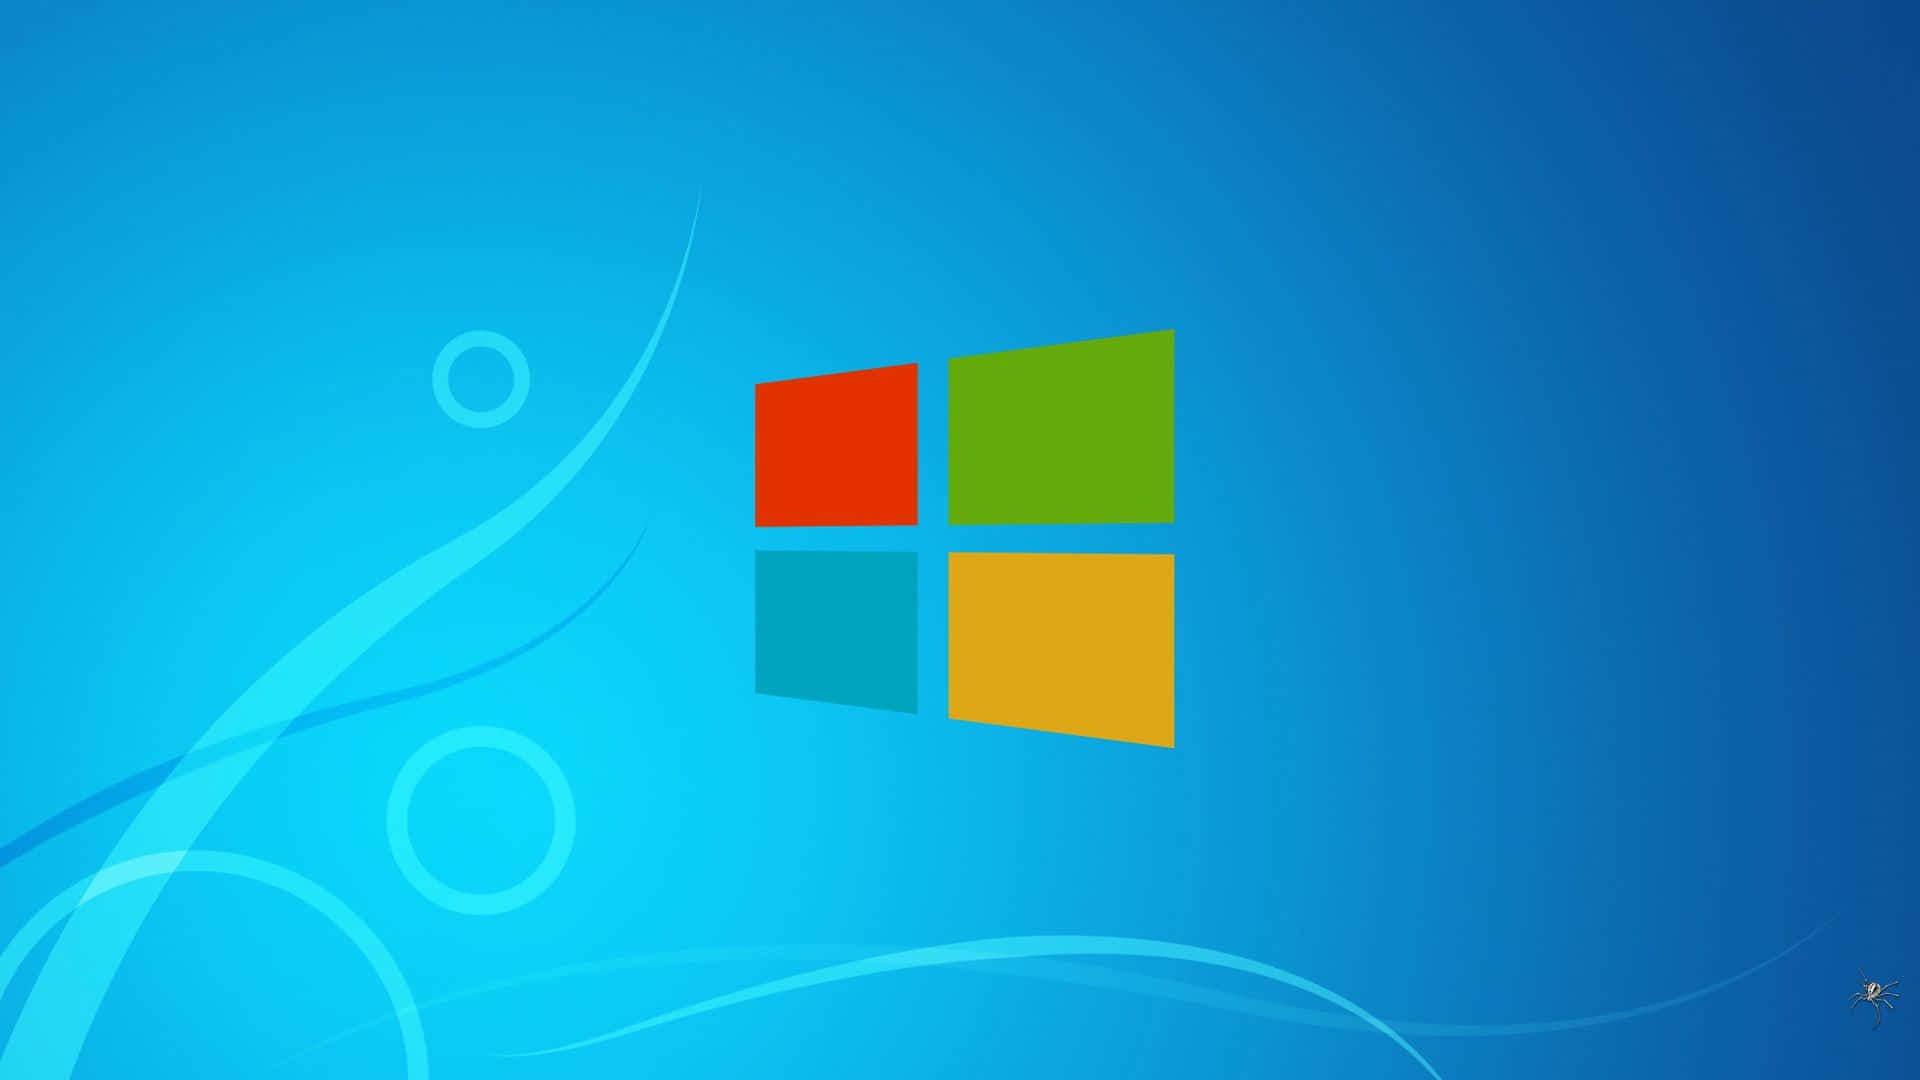 Windows 10 Logo On A Blue Background